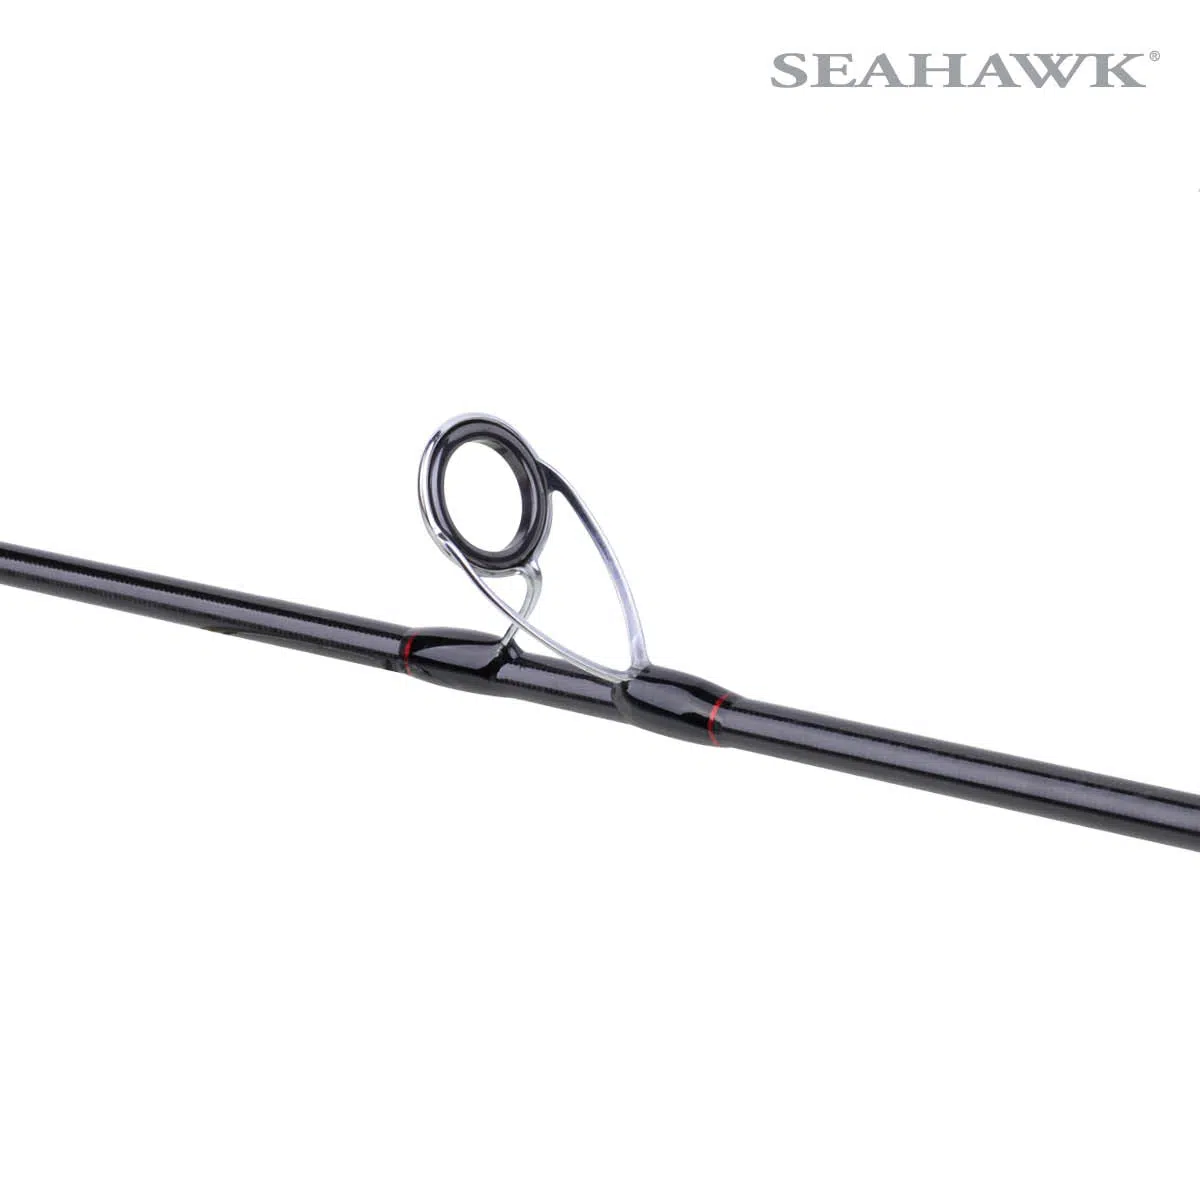 Seahawk Fishing Malaysia  Tournament Pro Spinning Rod